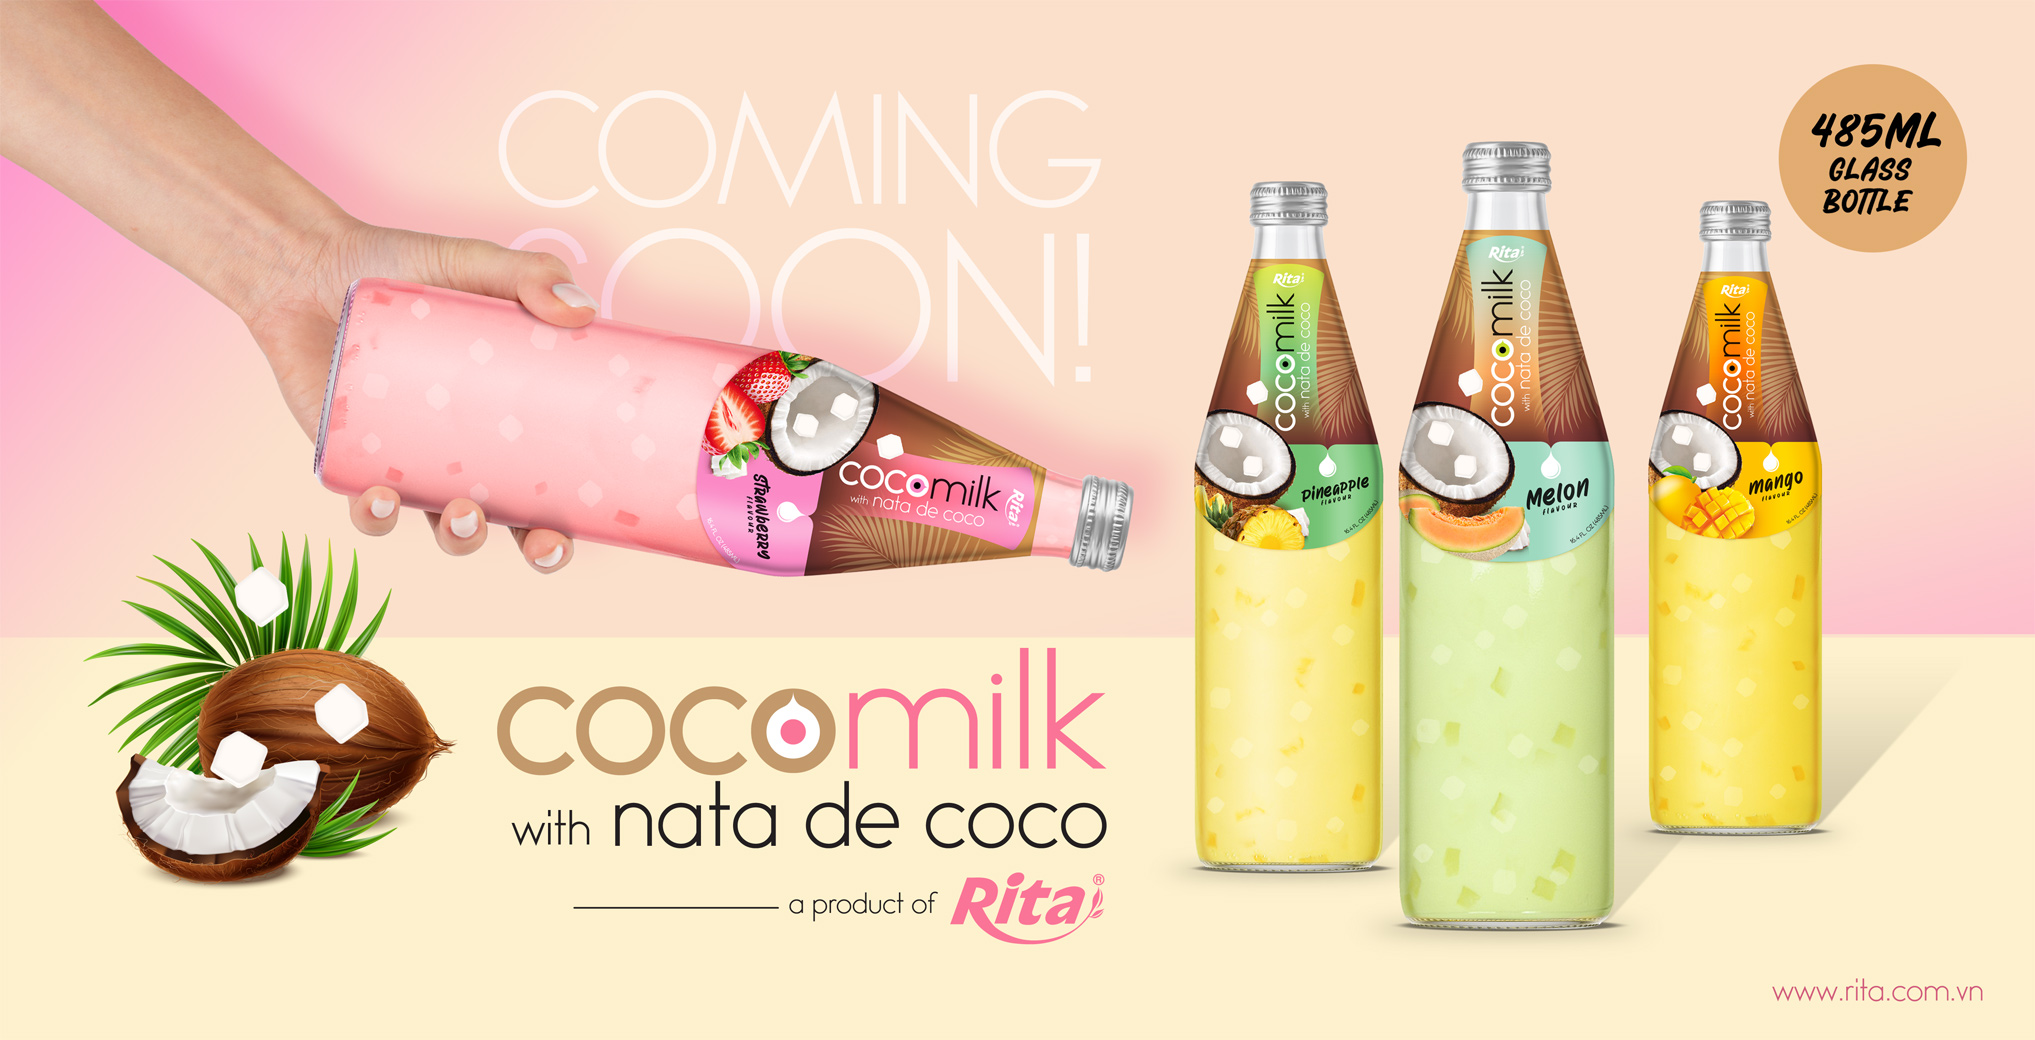 Design Coco Milk with nata de coco